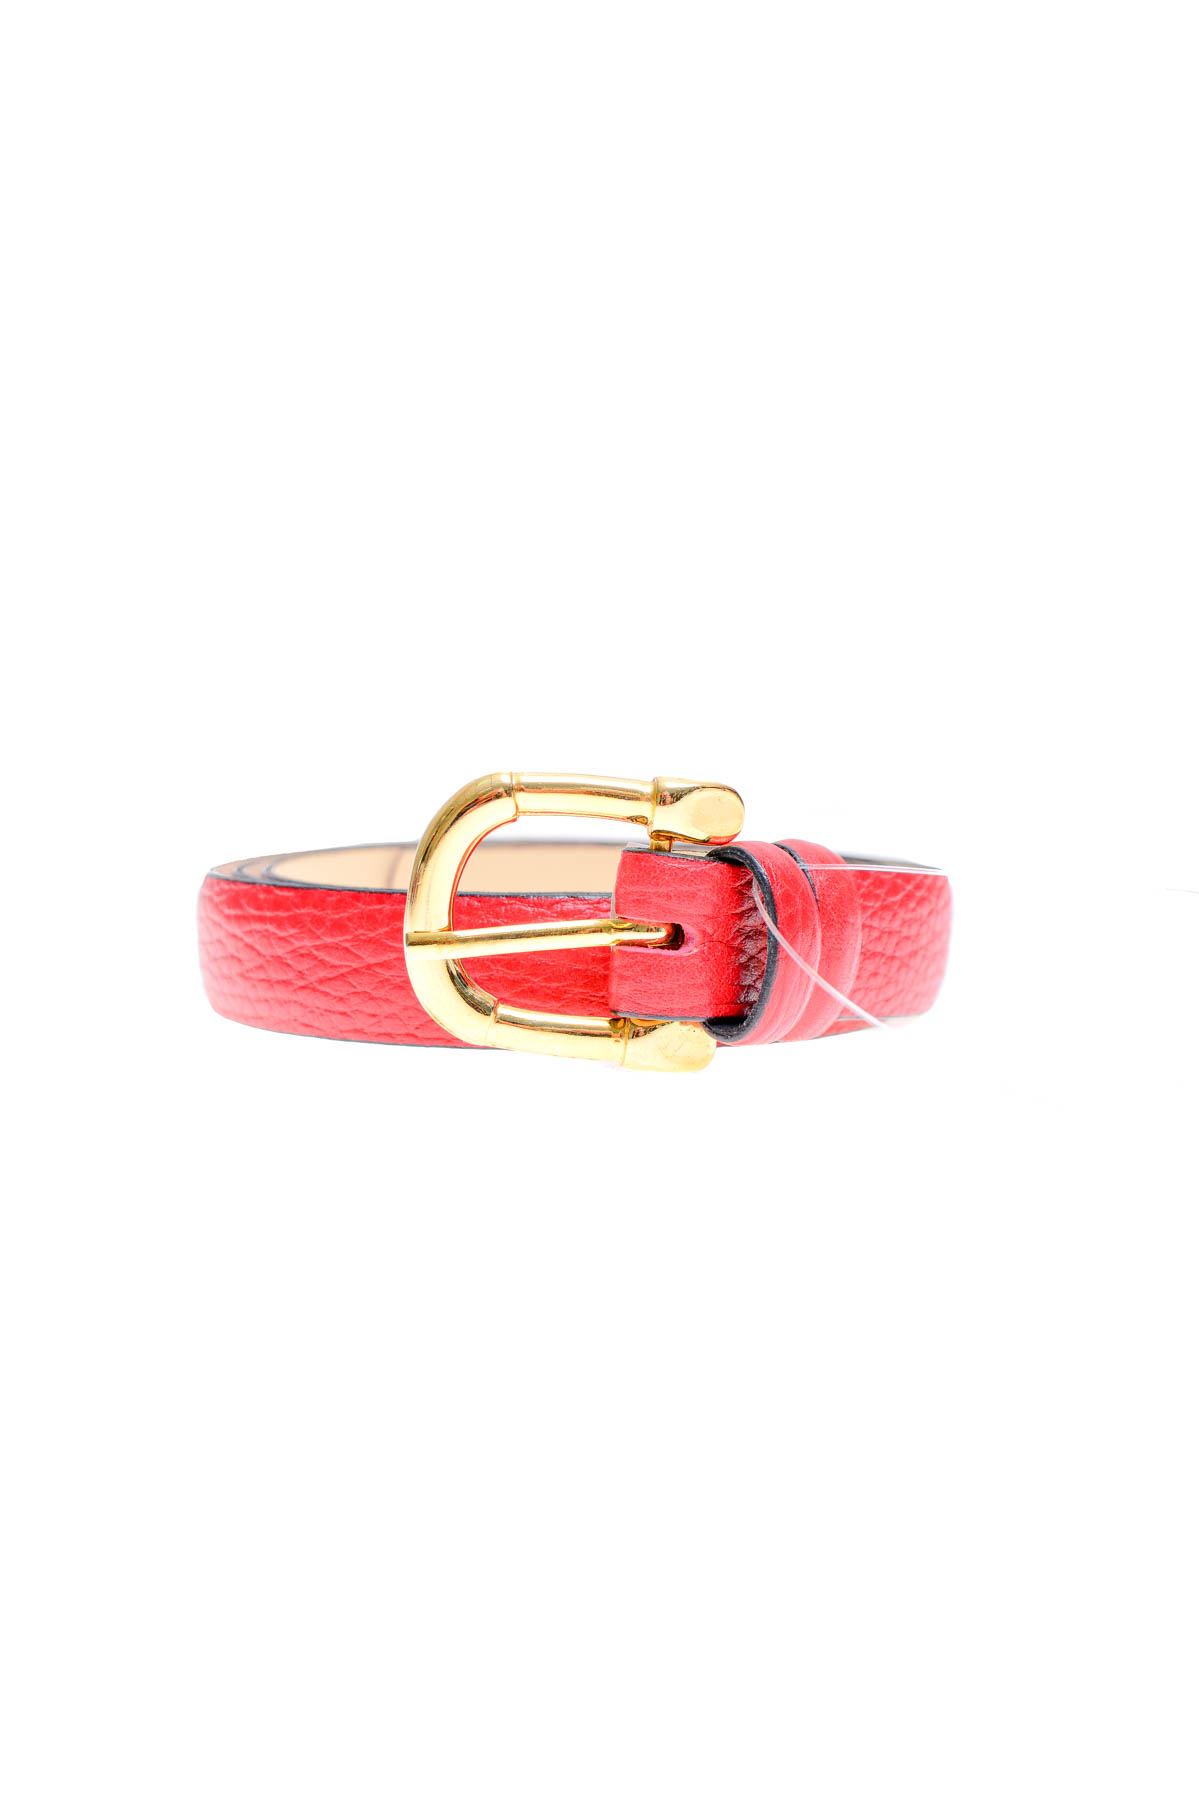 Ladies's belt - Kensol - 0